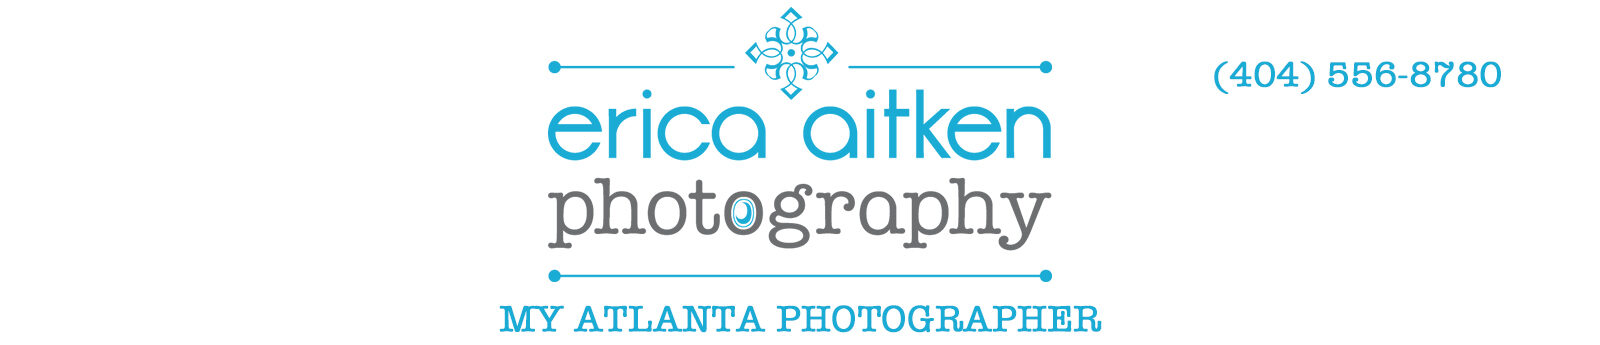 Erica Aitken Photography, Photographer in Atlanta, 404-556-8780